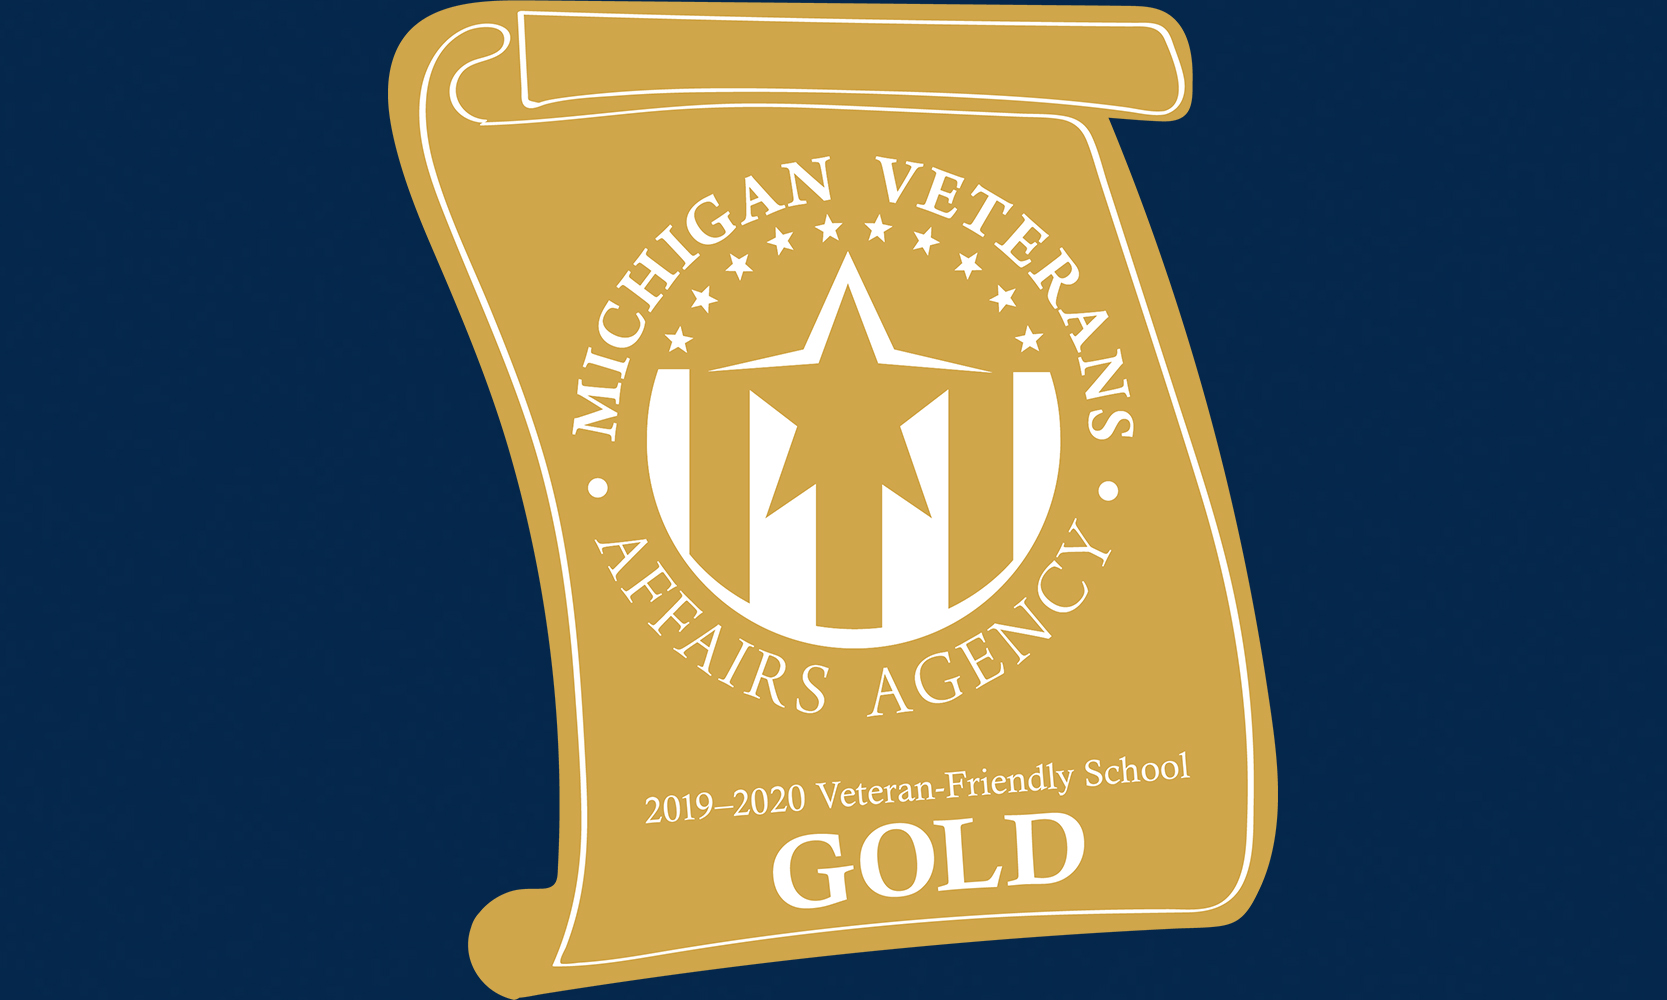 Michigan Veterans Affairs Agency Gold 2019-2020 Veteran Friendly School logo